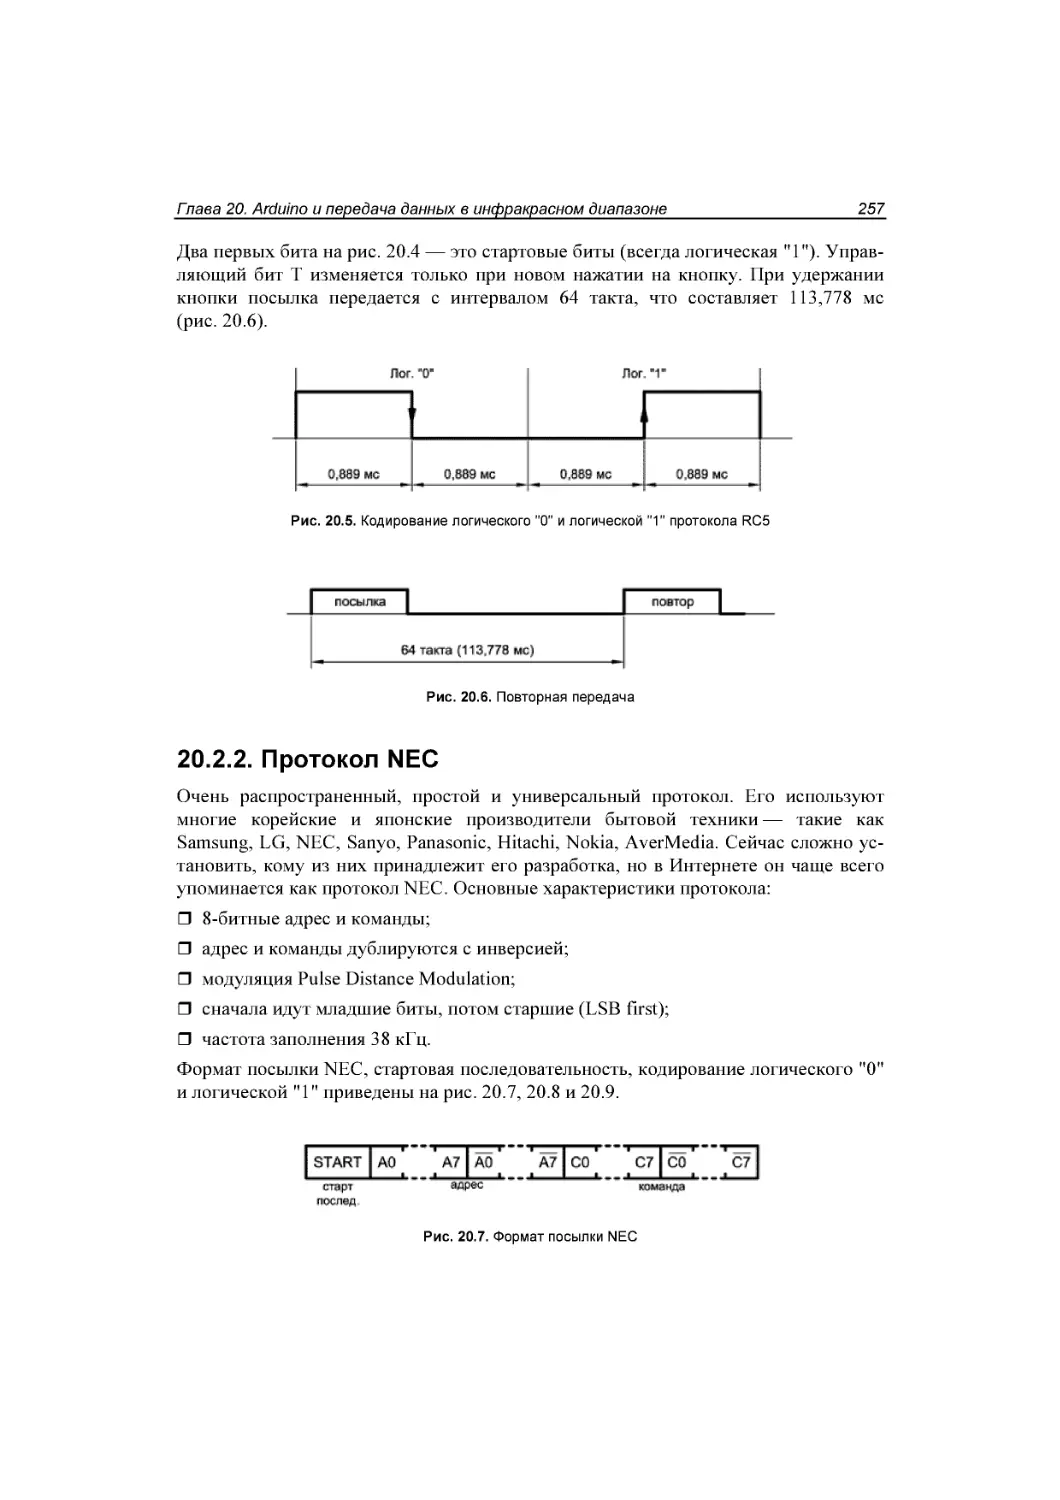 ﻿20.2.2. Протокол NEC